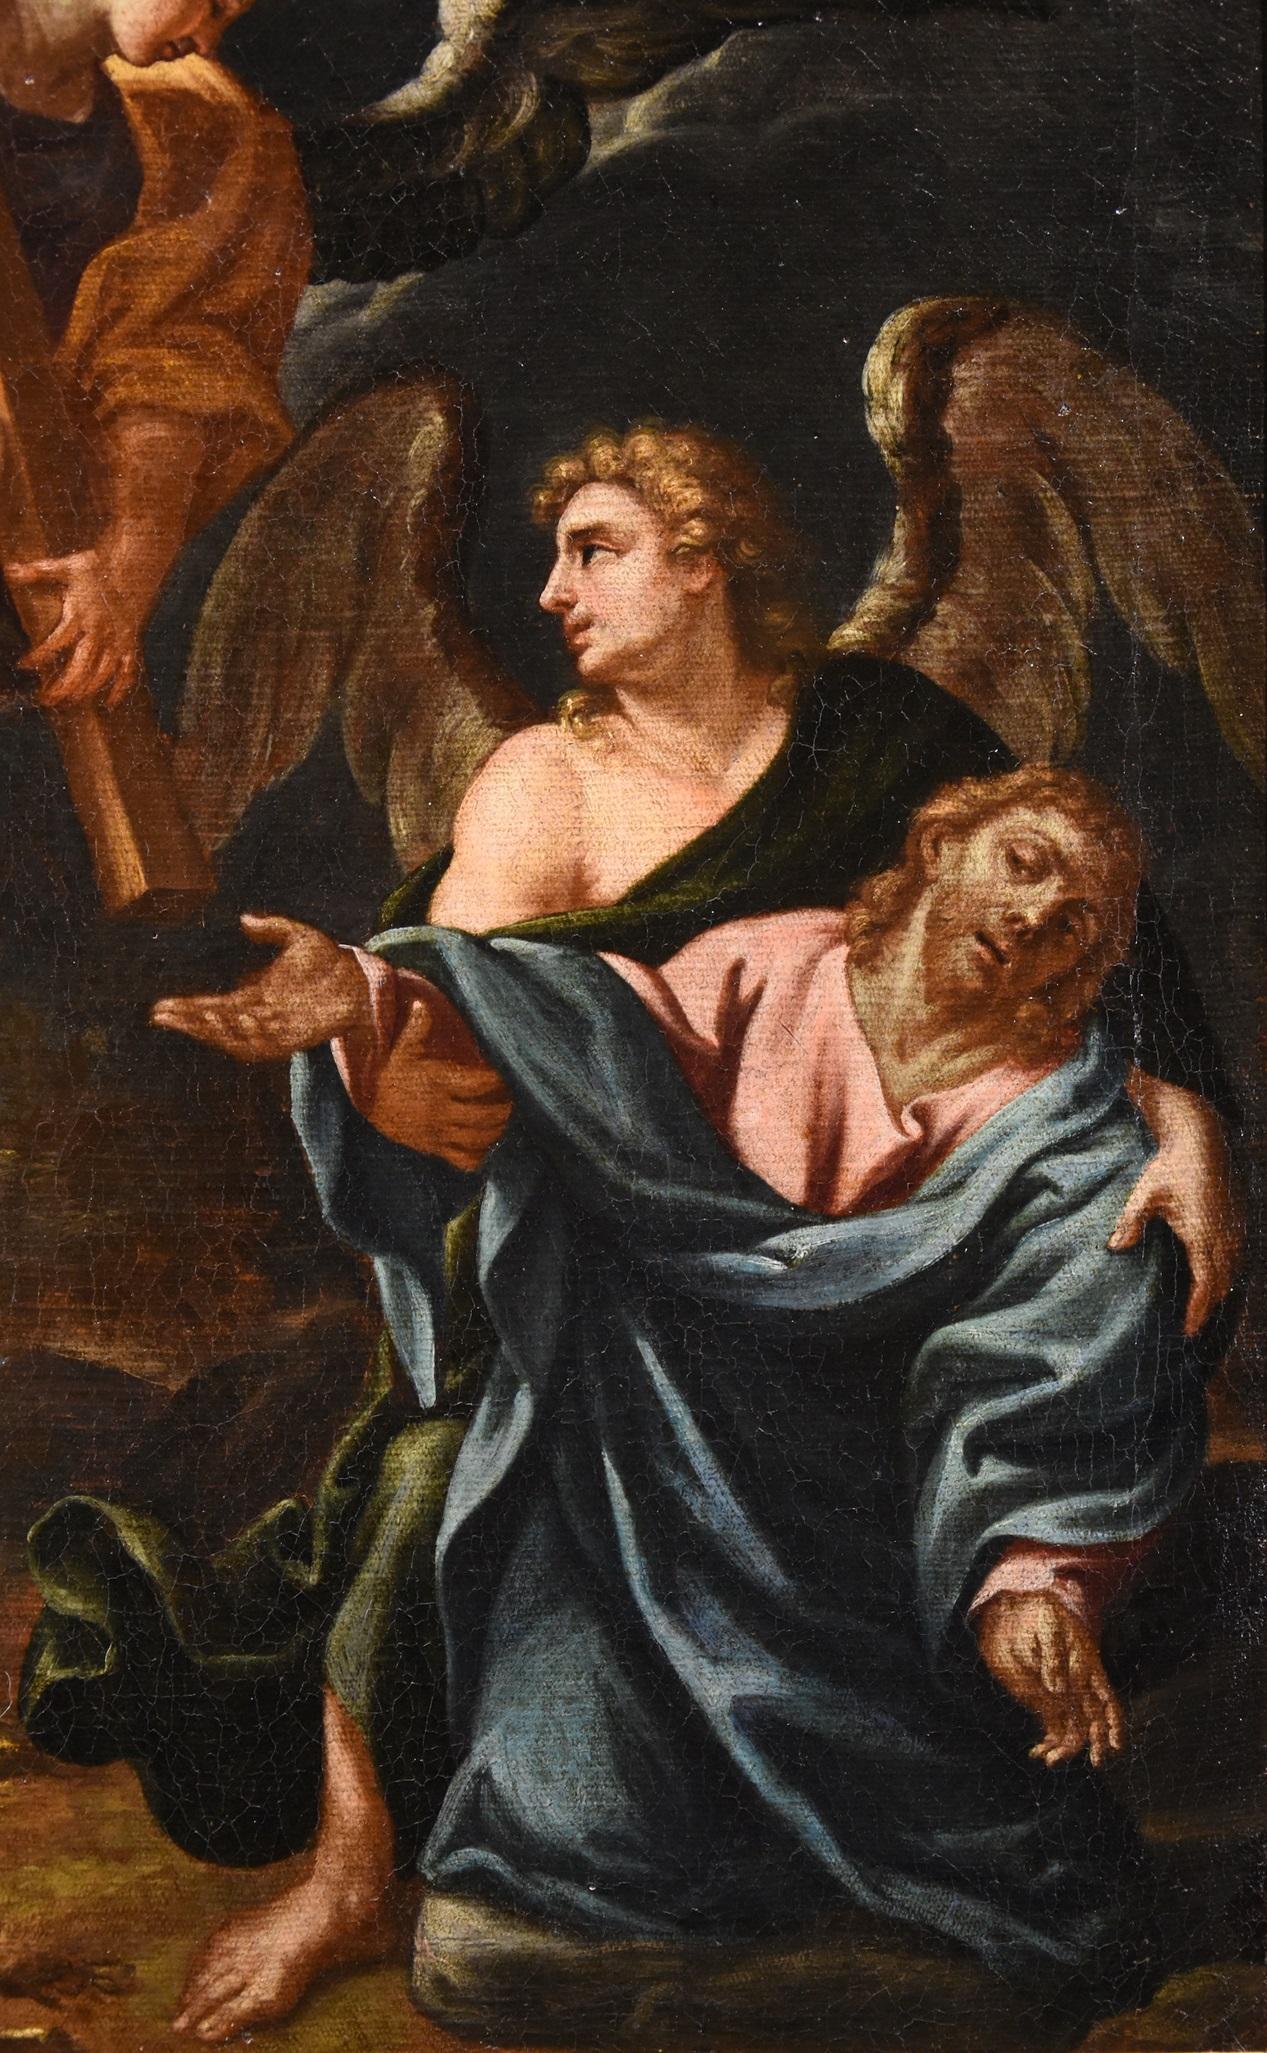 Christ Angels Pietro Da Cortona Paint 17th Century Oil on canvas Old master Art - Old Masters Painting by Pietro da Cortona (Cortona 1597 - Rome 1669